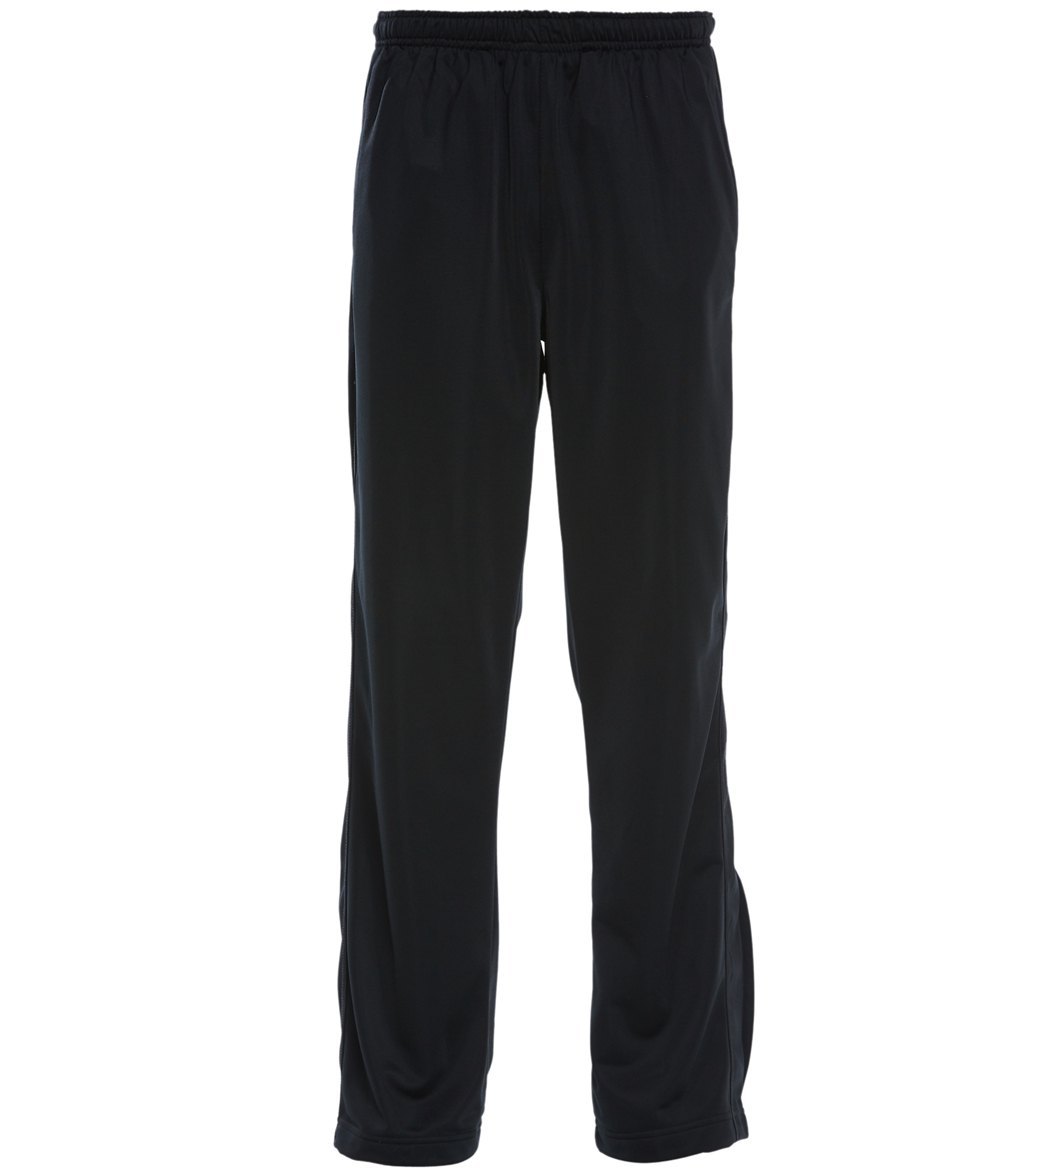 Men's Sport-Tek Tricot Track Pants - Black Large Polyester - Swimoutlet.com